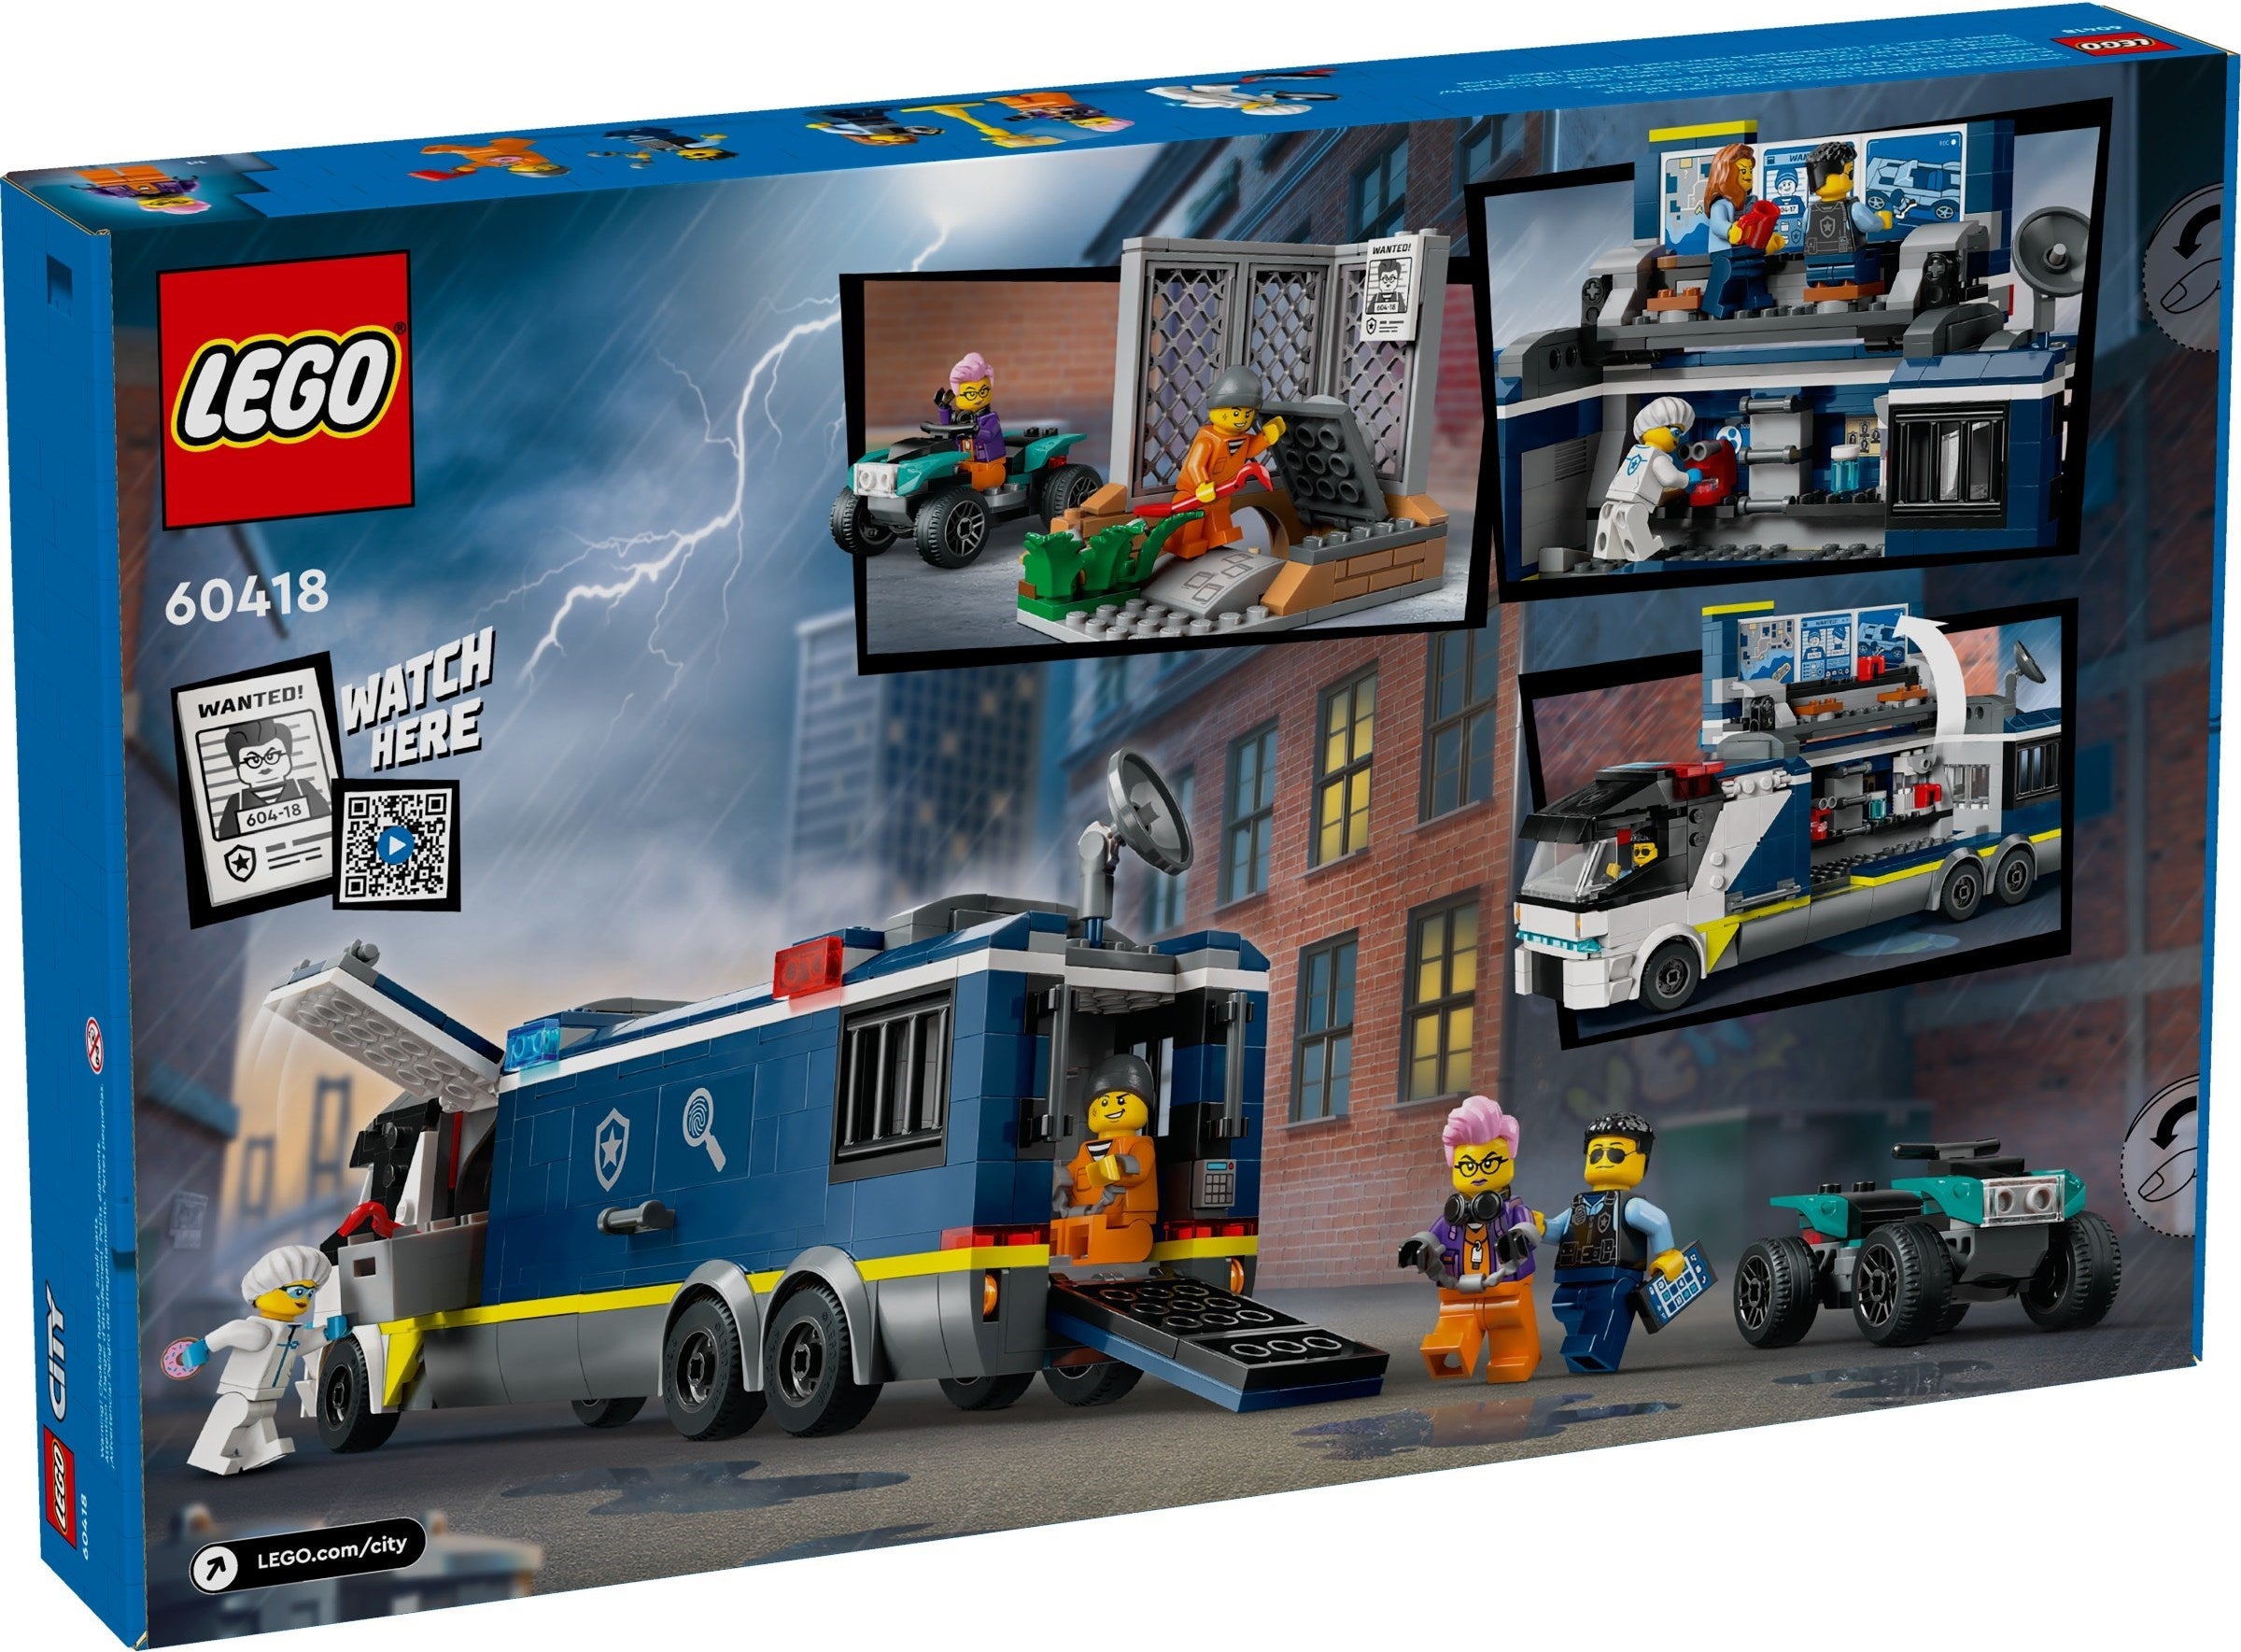 LEGO 60418 Police Mobile Crime Lab Truck